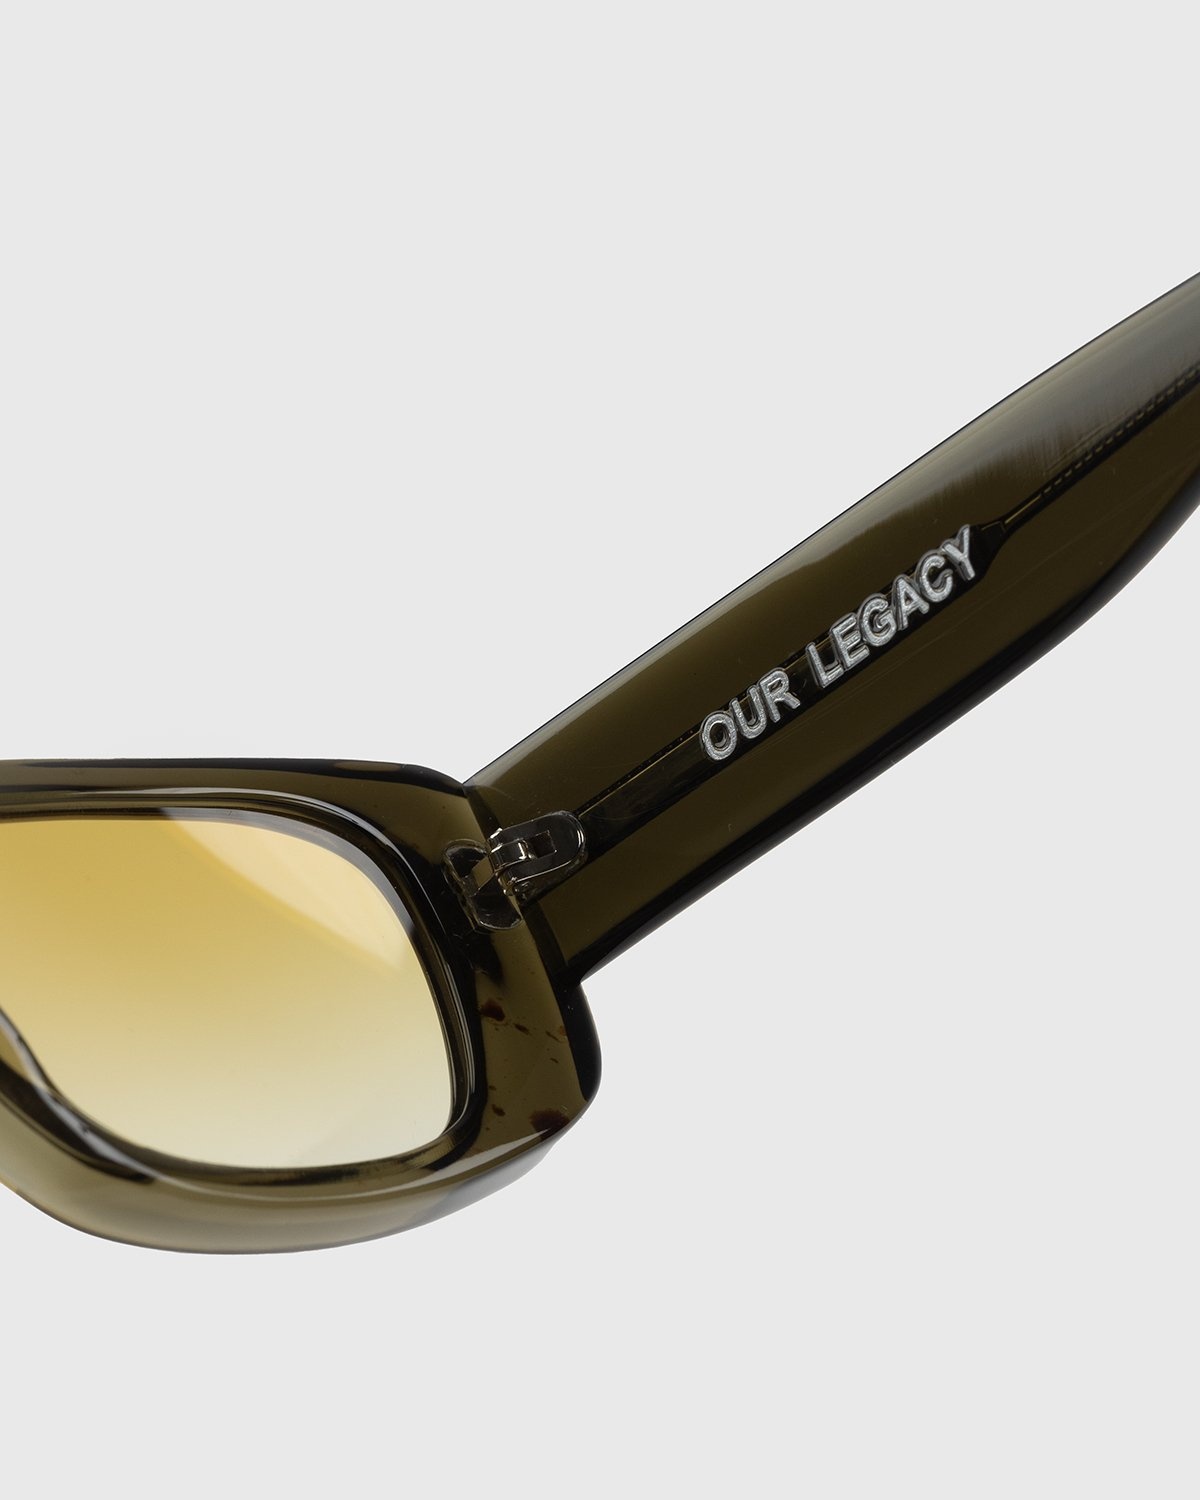 Our Legacy – Samhain Sunglasses Transparent Green - Sunglasses - Green - Image 3